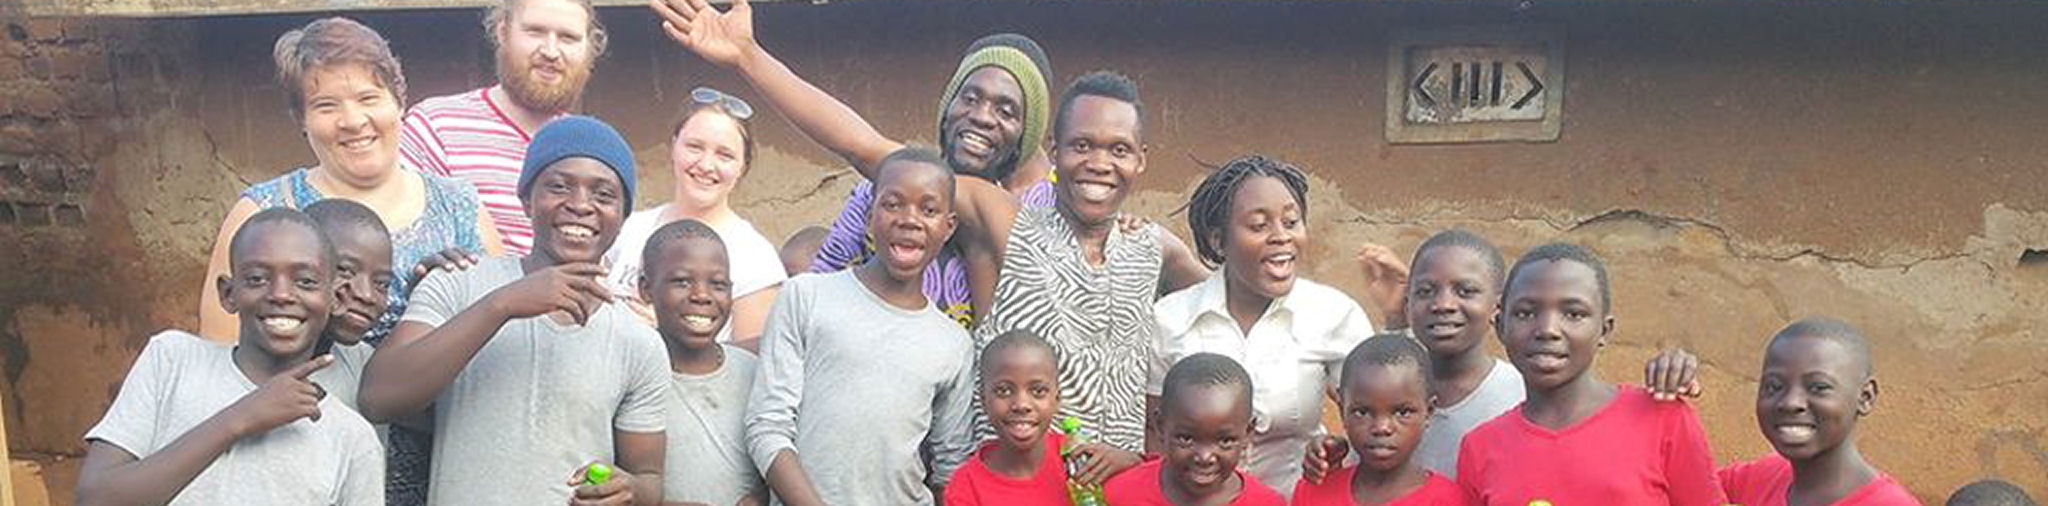 One Love Troupe Uganda Slums